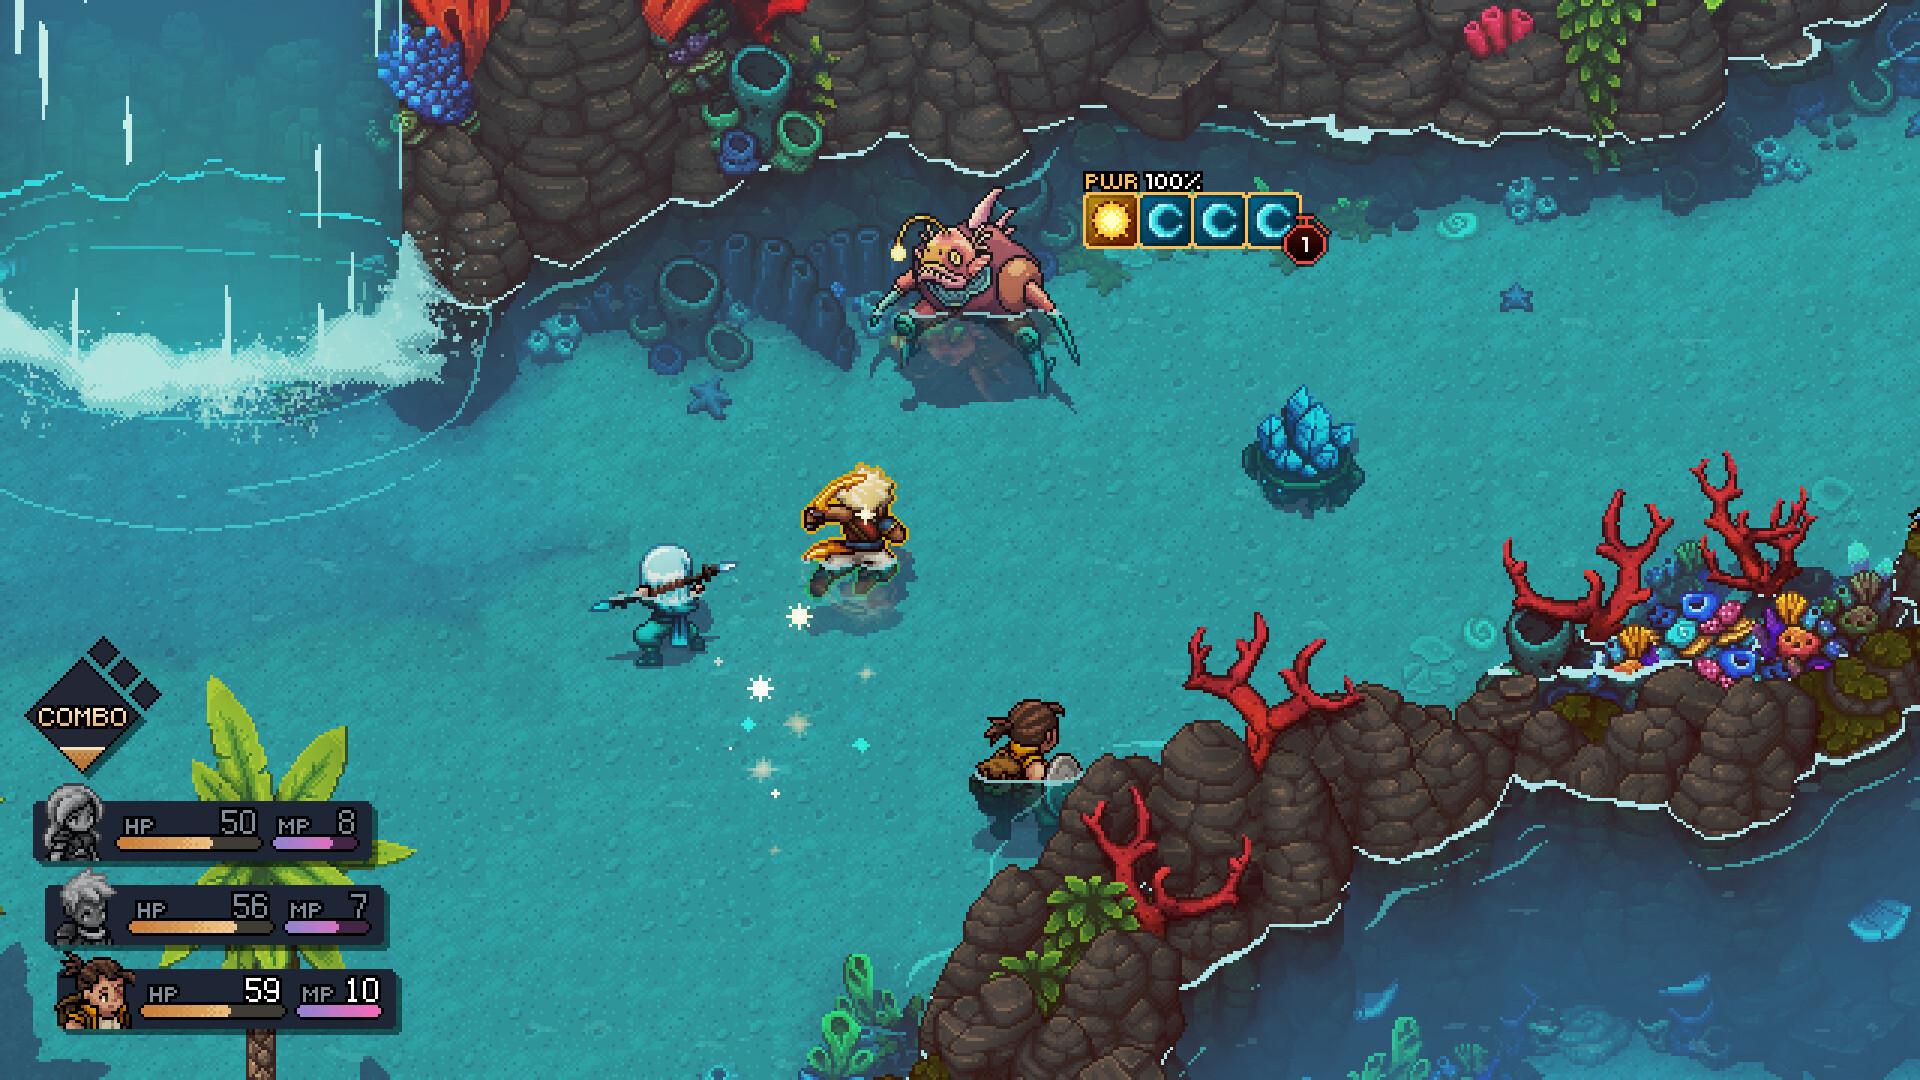 Screenshot №10 from game Sea of Stars